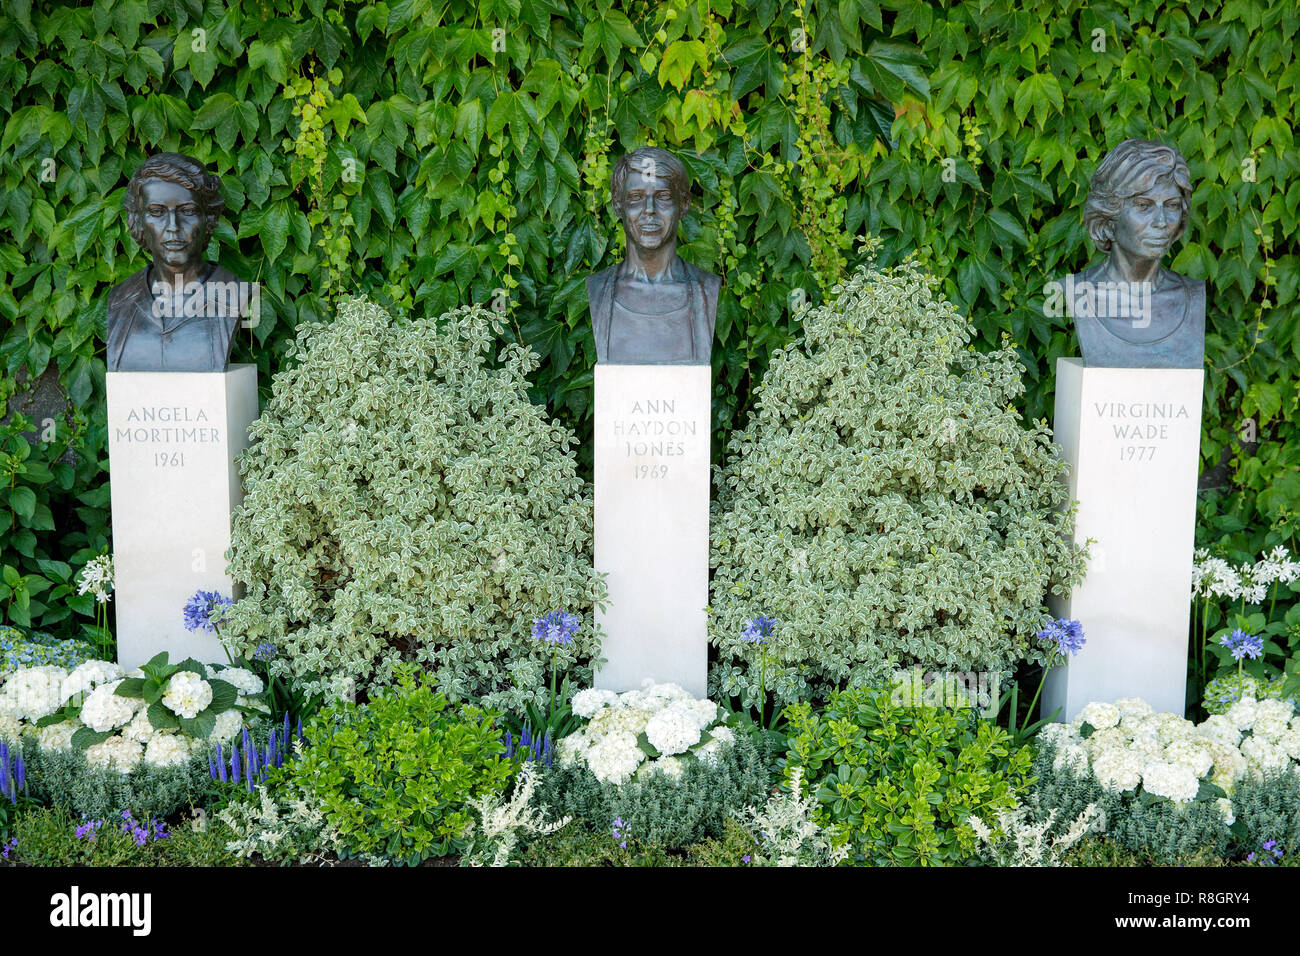 Statues of British tennis legends Virginia Wade, Ann Haydon Jones and Angela Mortimer Stock Photo